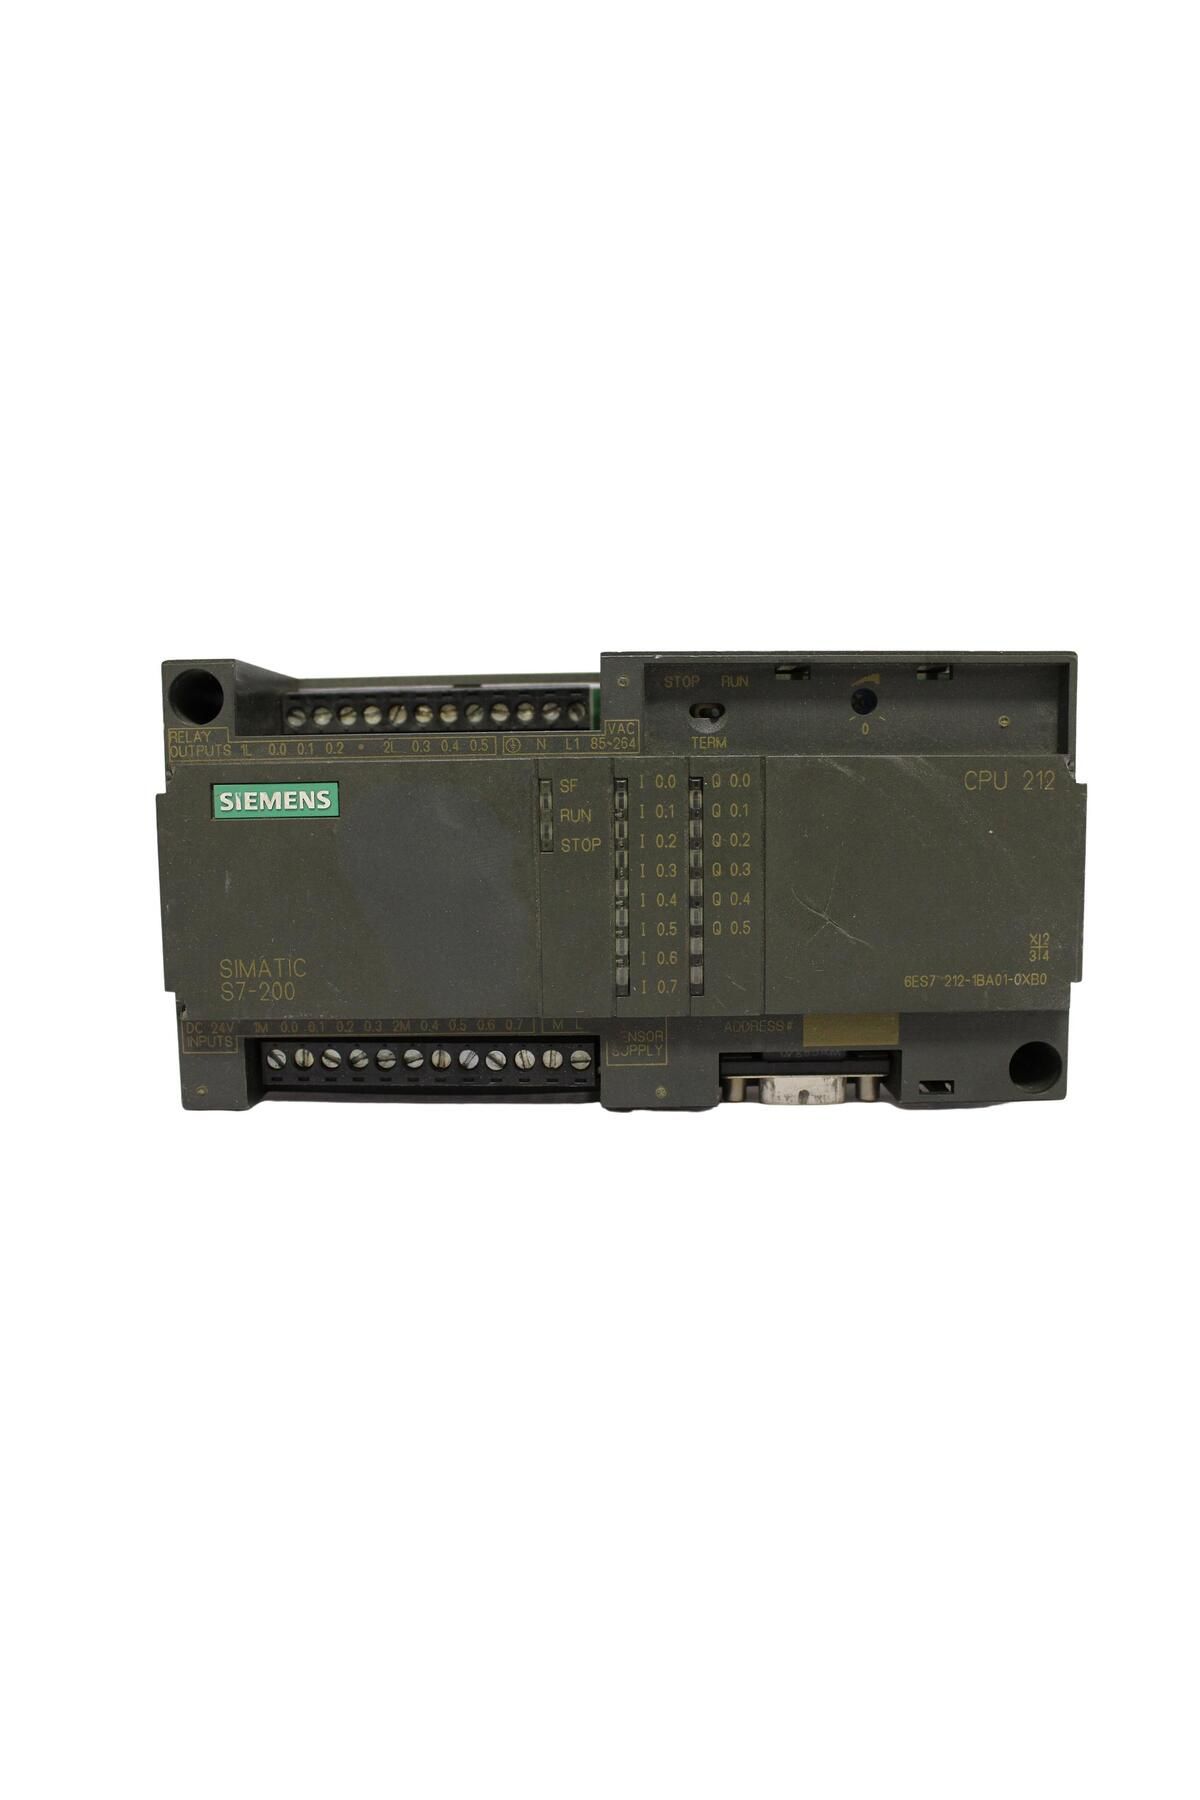 Siemens 6ES7212-1BA01-0XB0, 6ES7 212-1BA01-0XB0 SIMATIC S7-200 CPU 212 COMPACT